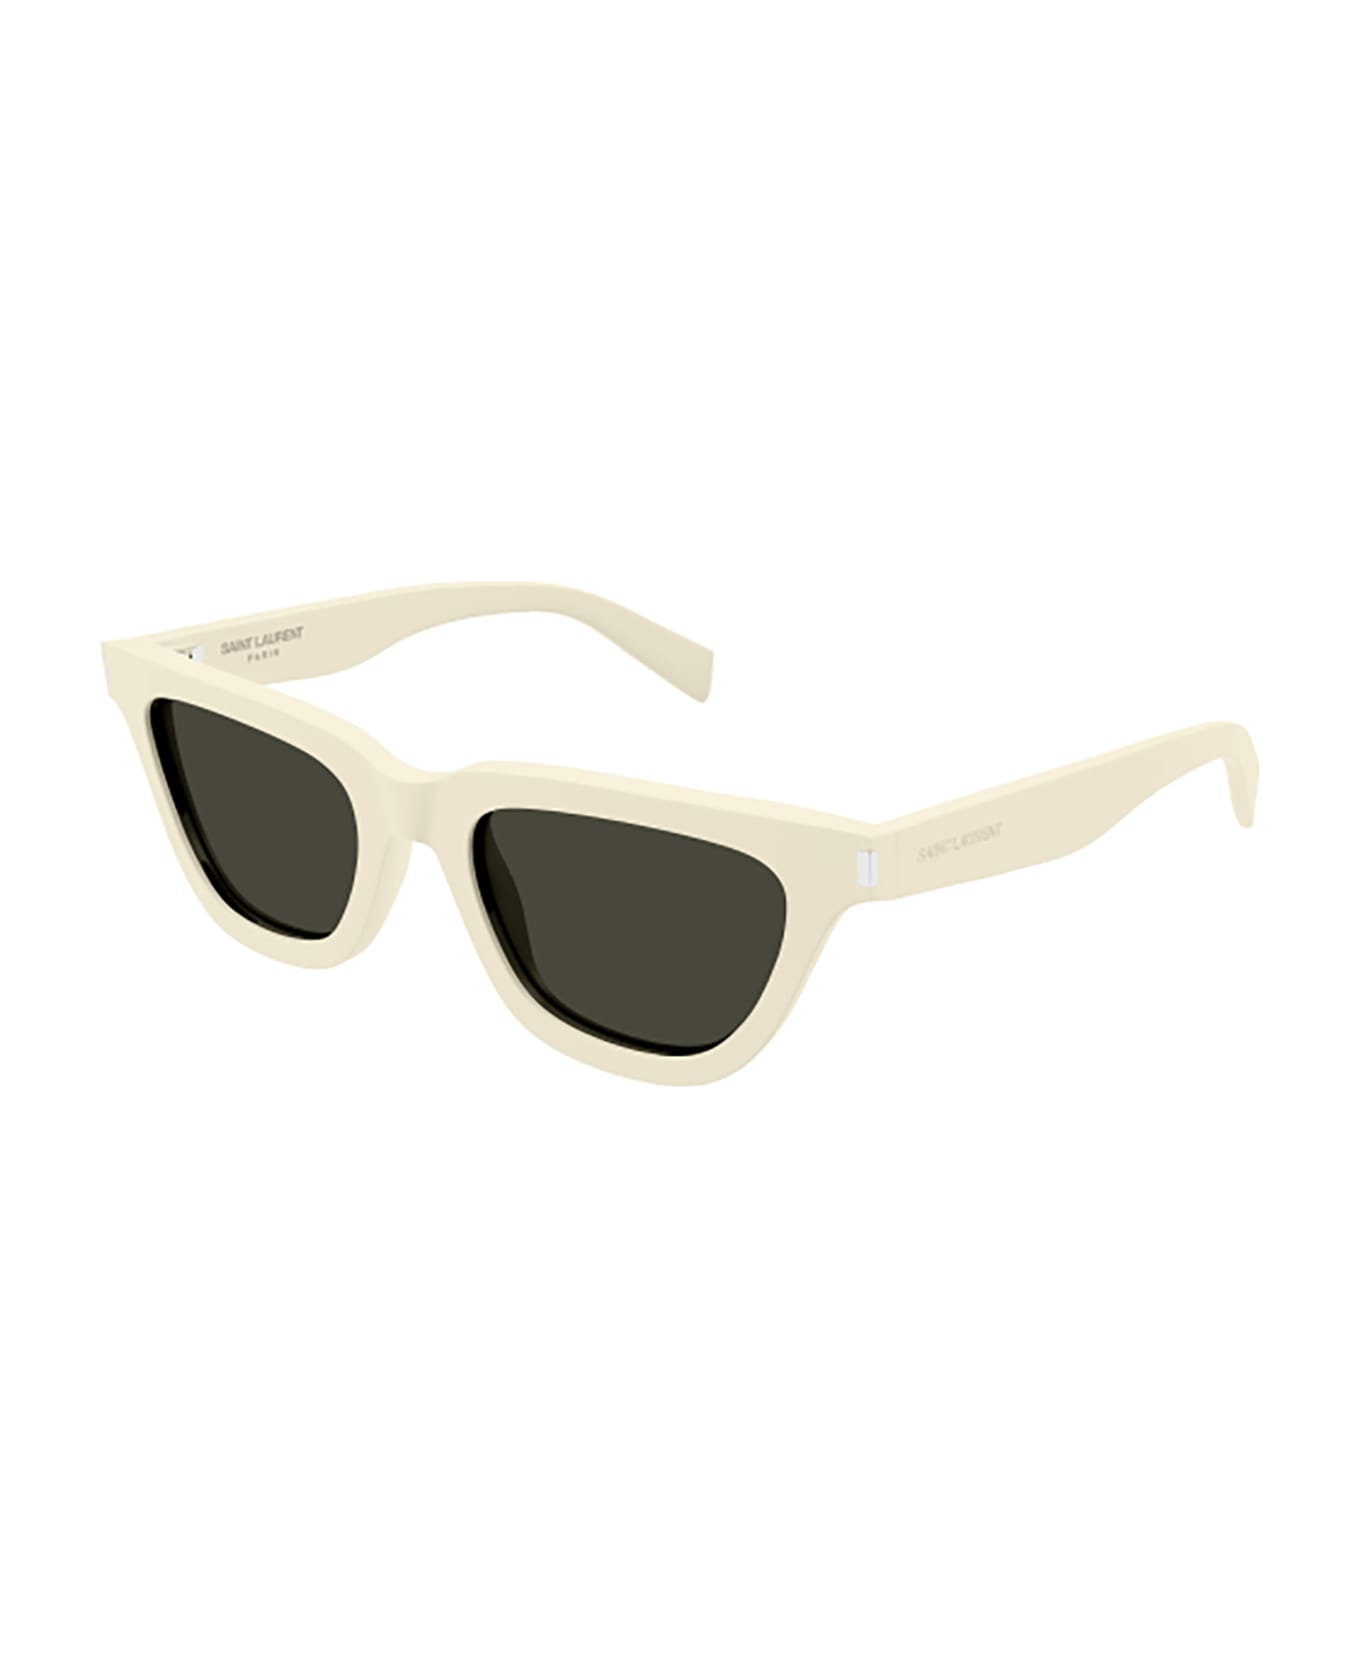 Saint Laurent Eyewear SL 462 SULPICE Sunglasses - Ivory Ivory Grey